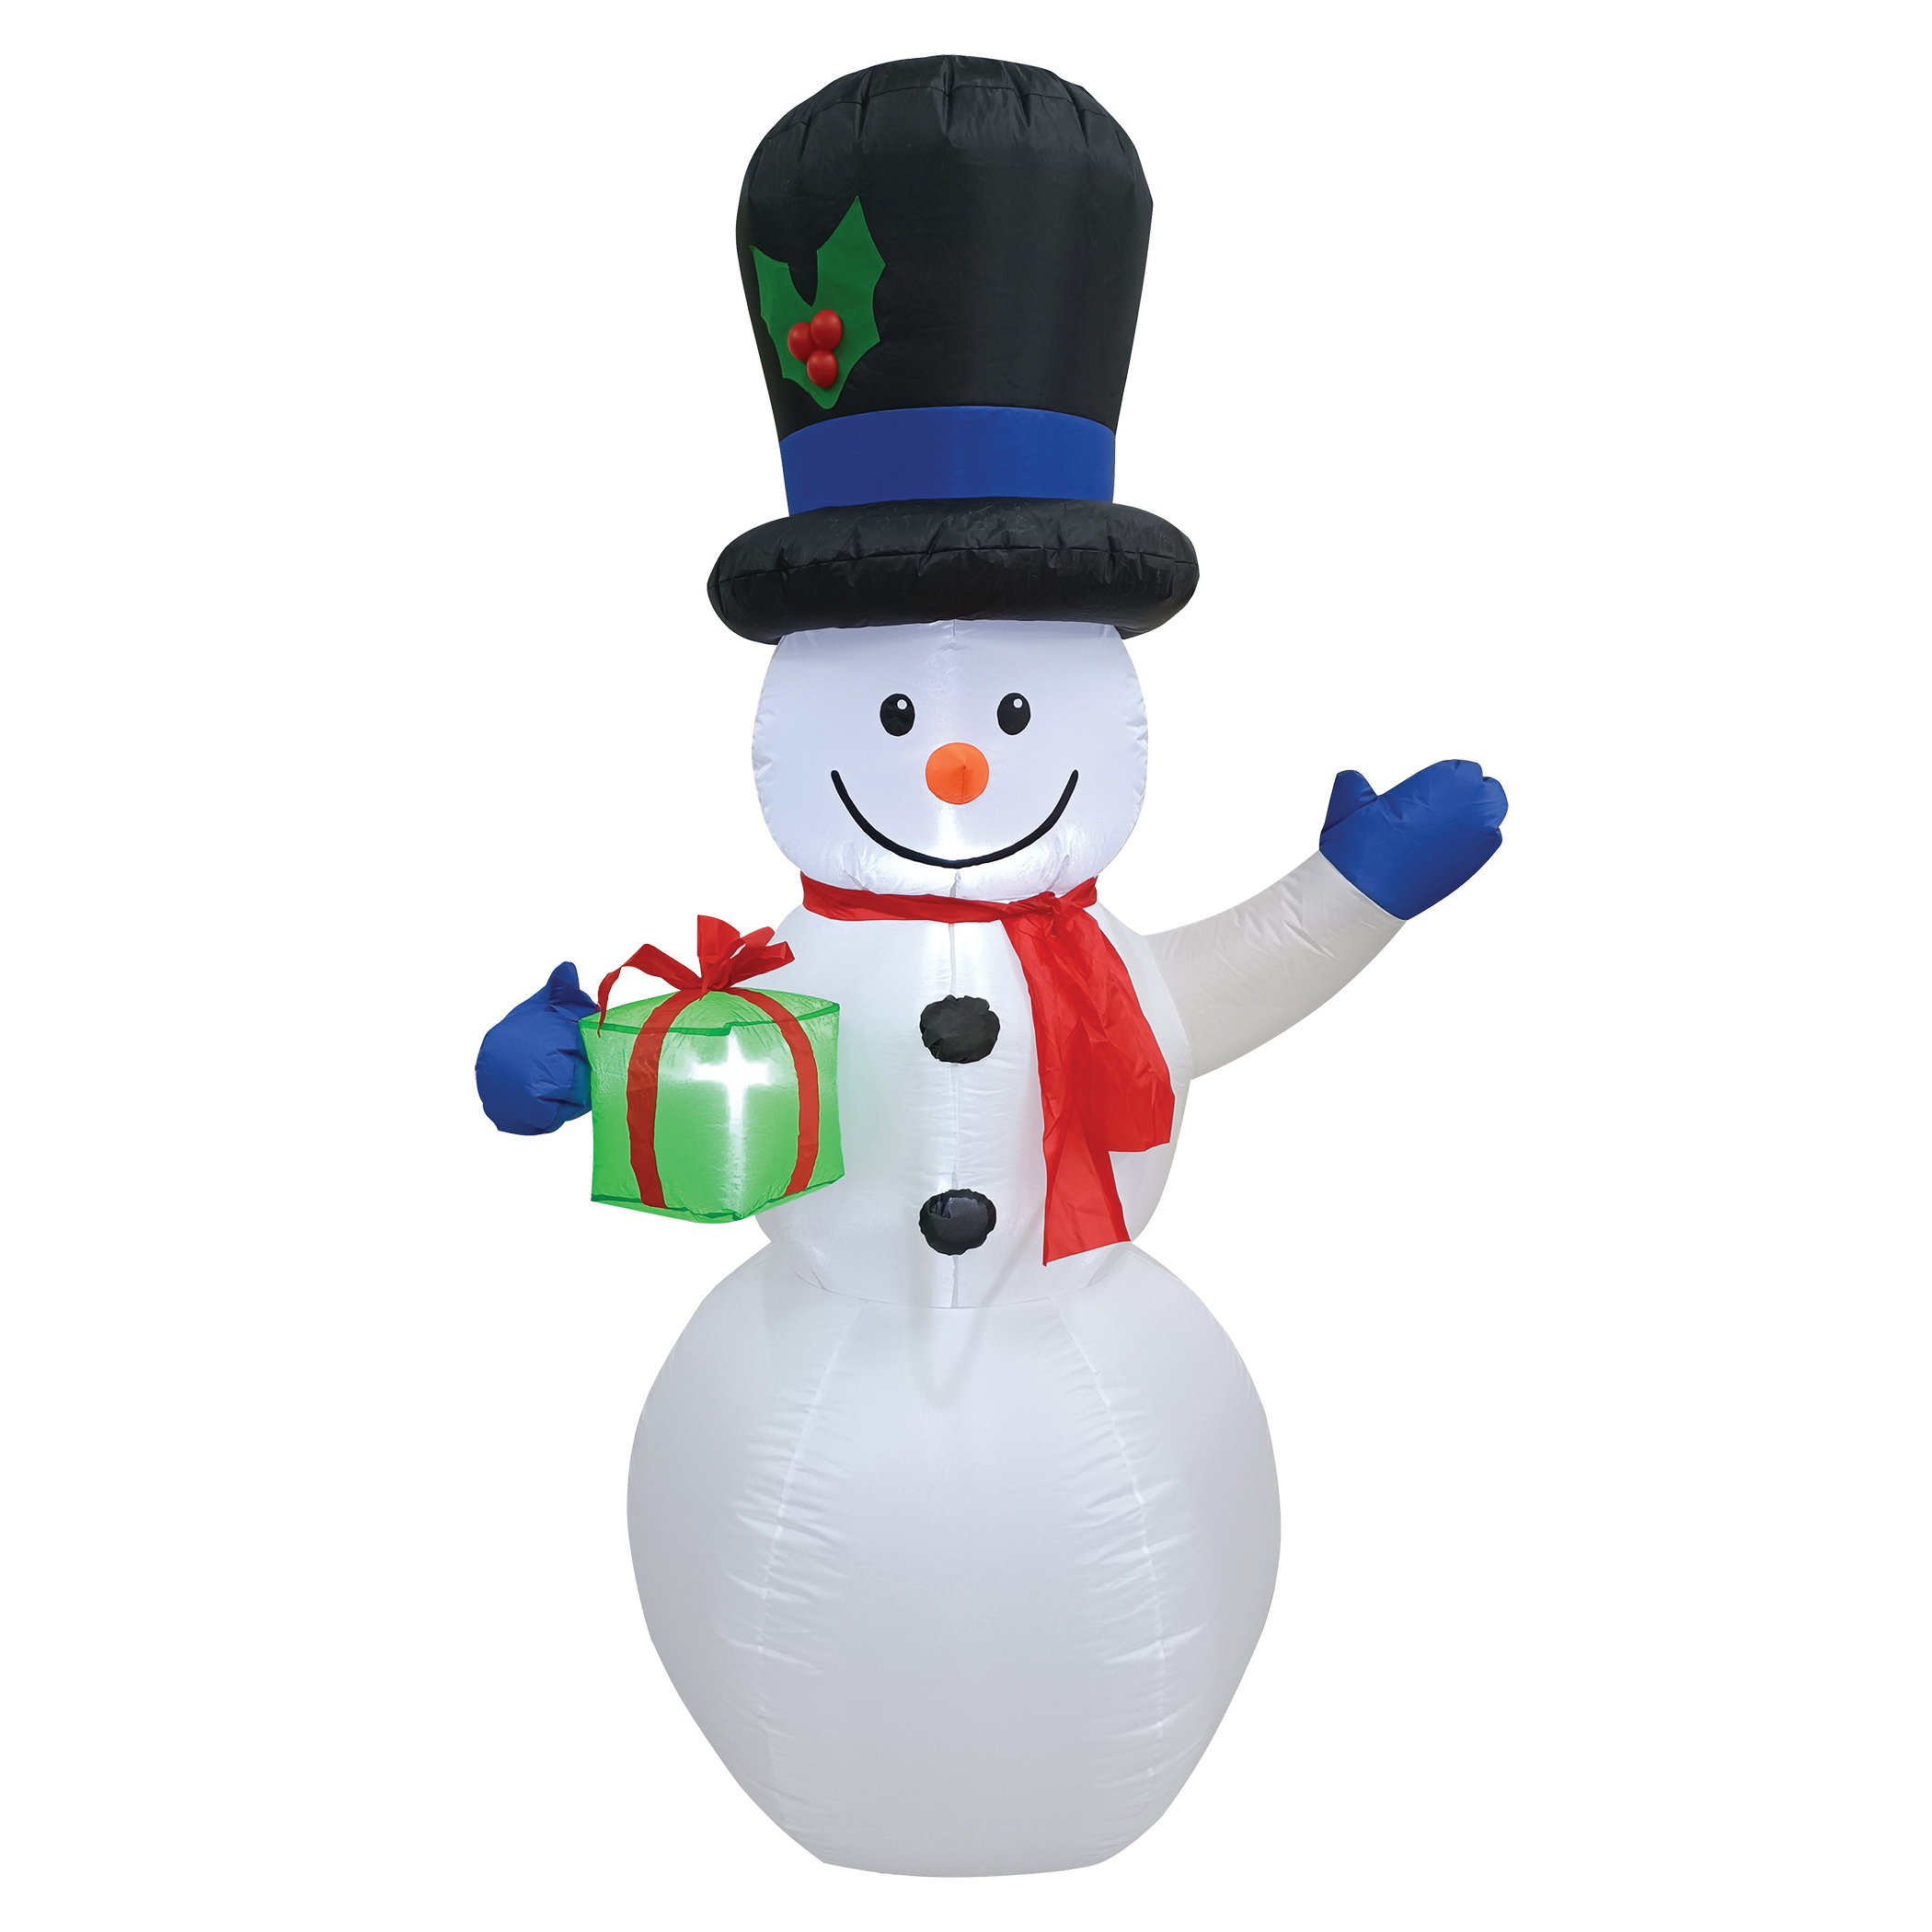 90341 Christmas Inflatable Snowman, Nylon, White, Super LED Bulb, 6 ft Tall